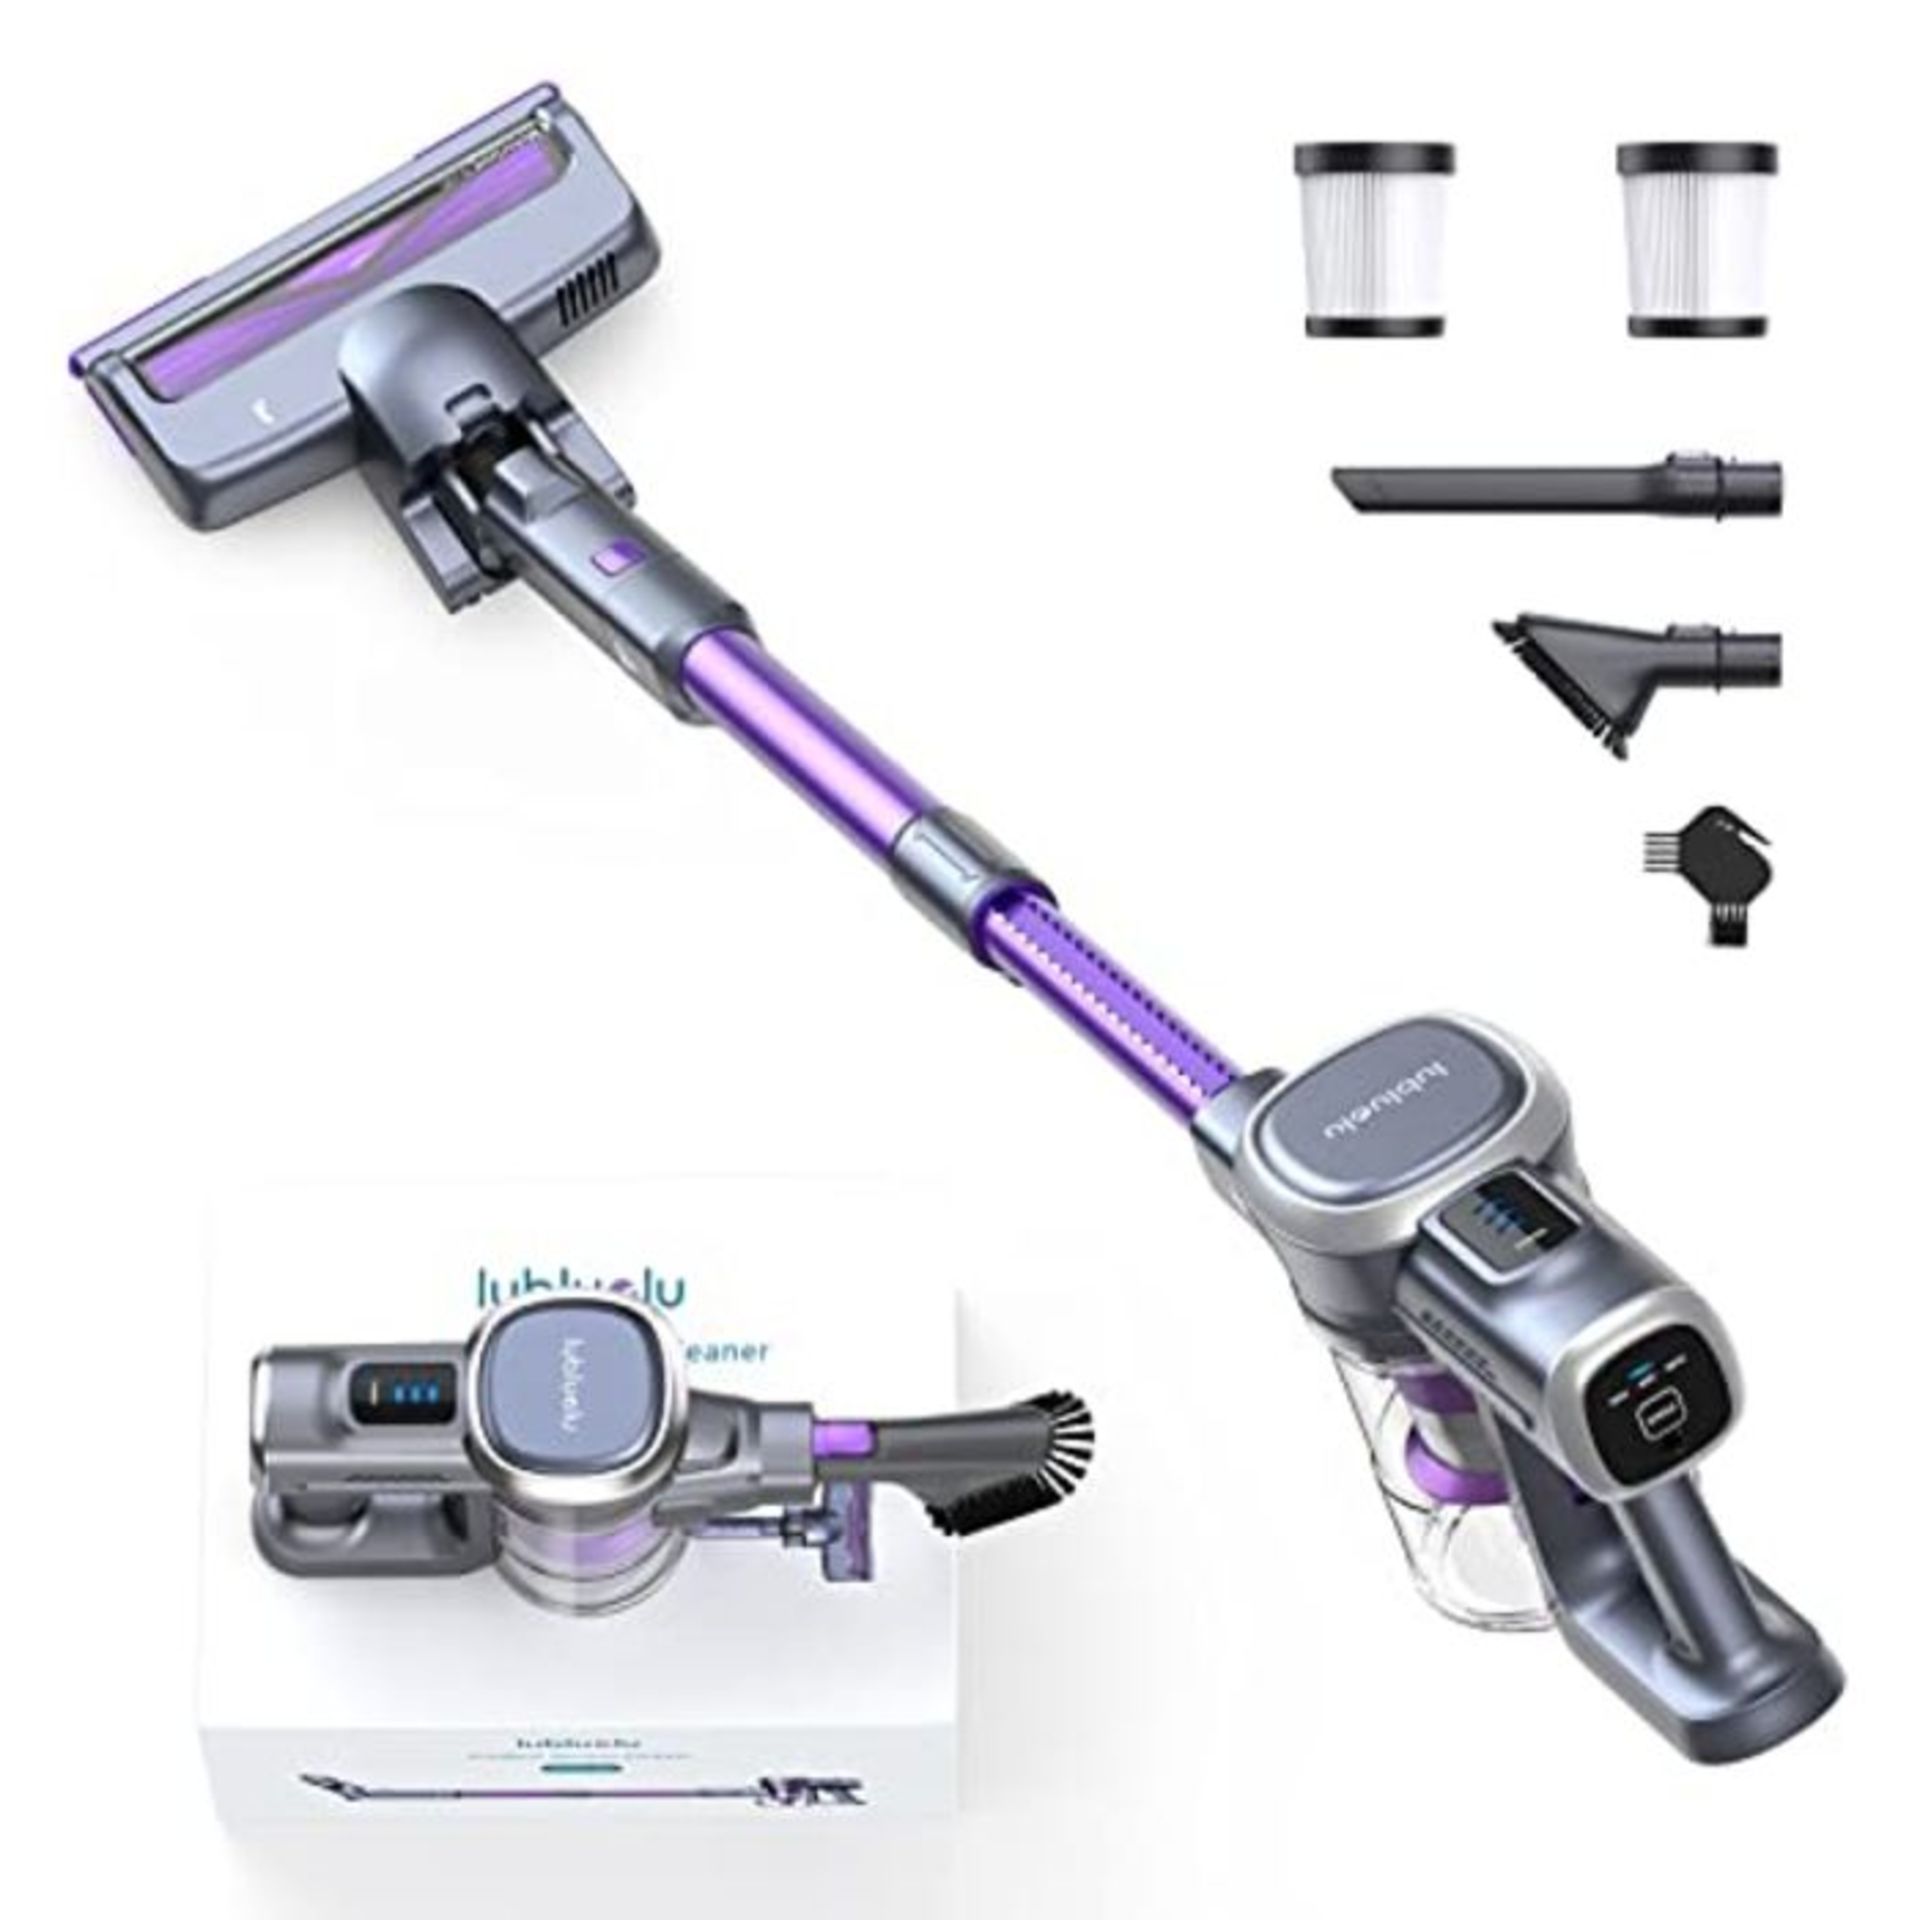 RRP £87.00 Lubluelu 25 Kpa Cordless Vacuum Cleaner, Cordless Stick Vacuum with 235W Brushless Mot